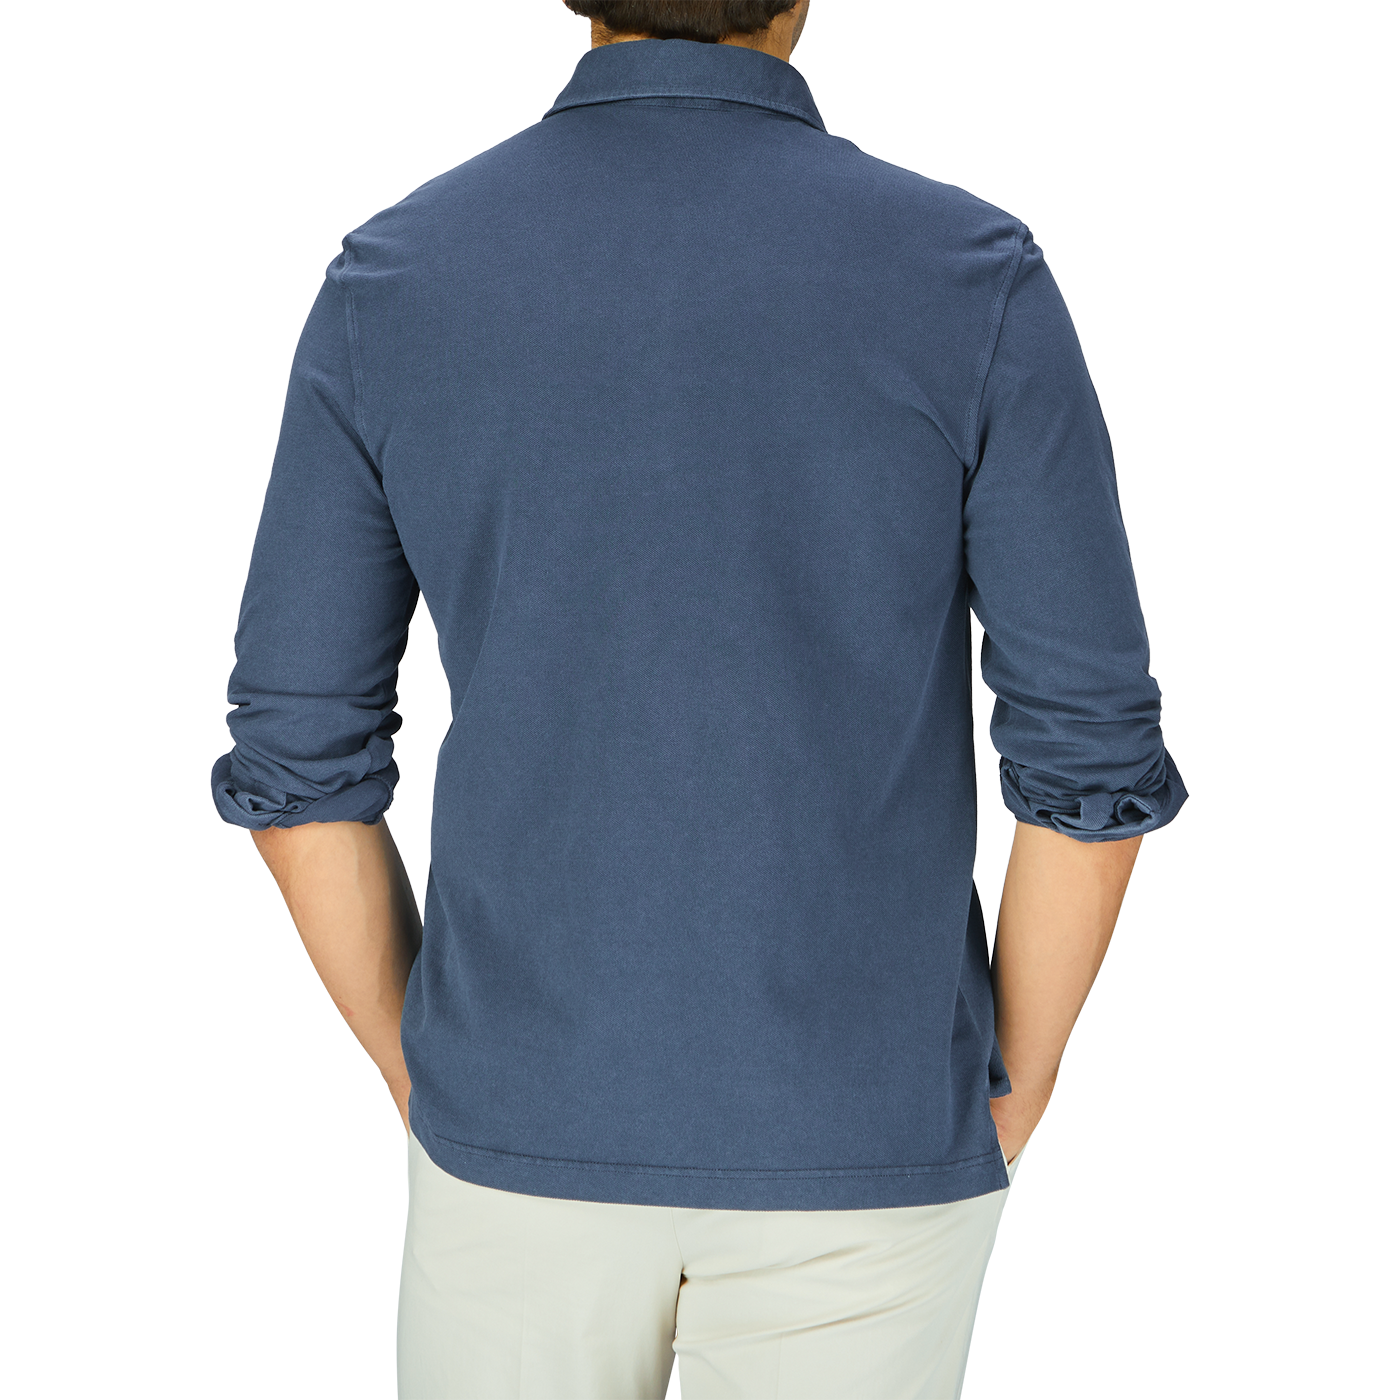 The man is wearing a Medium Blue Cotton Piquet LS Polo Shirt by Drumohr.